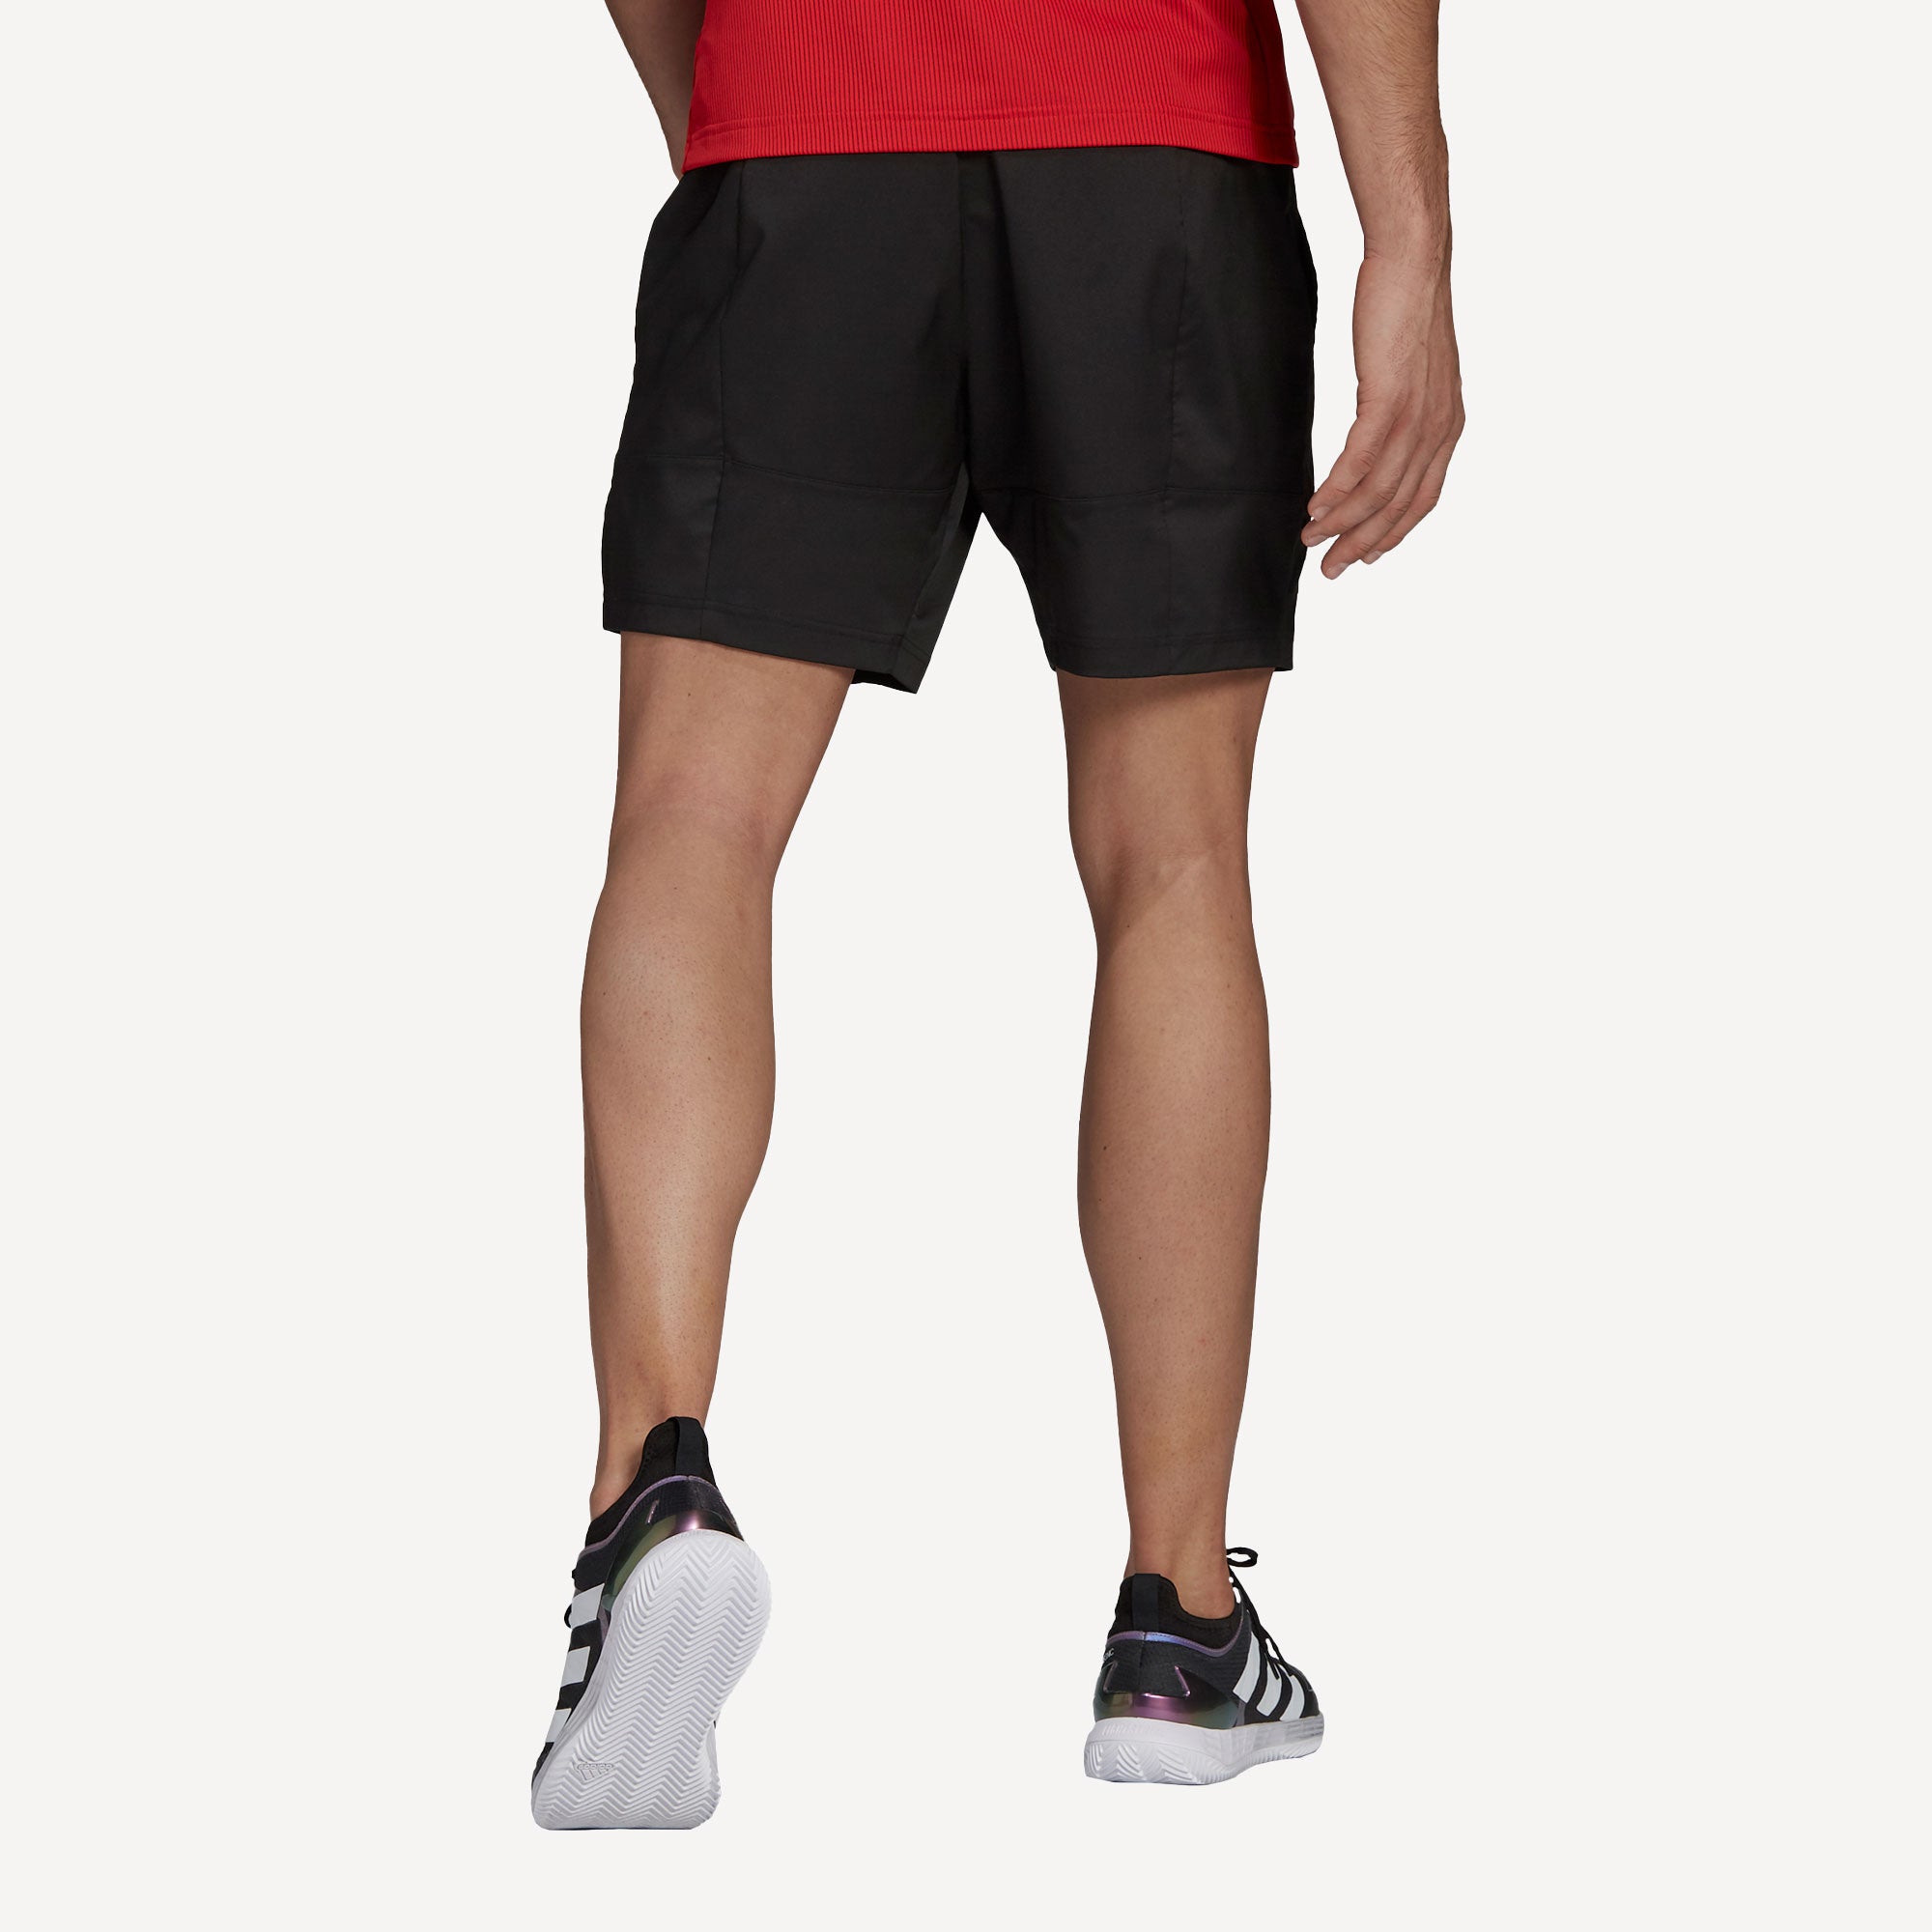 adidas Ergo Primeblue Men's 7-Inch Tennis Shorts Black (2)